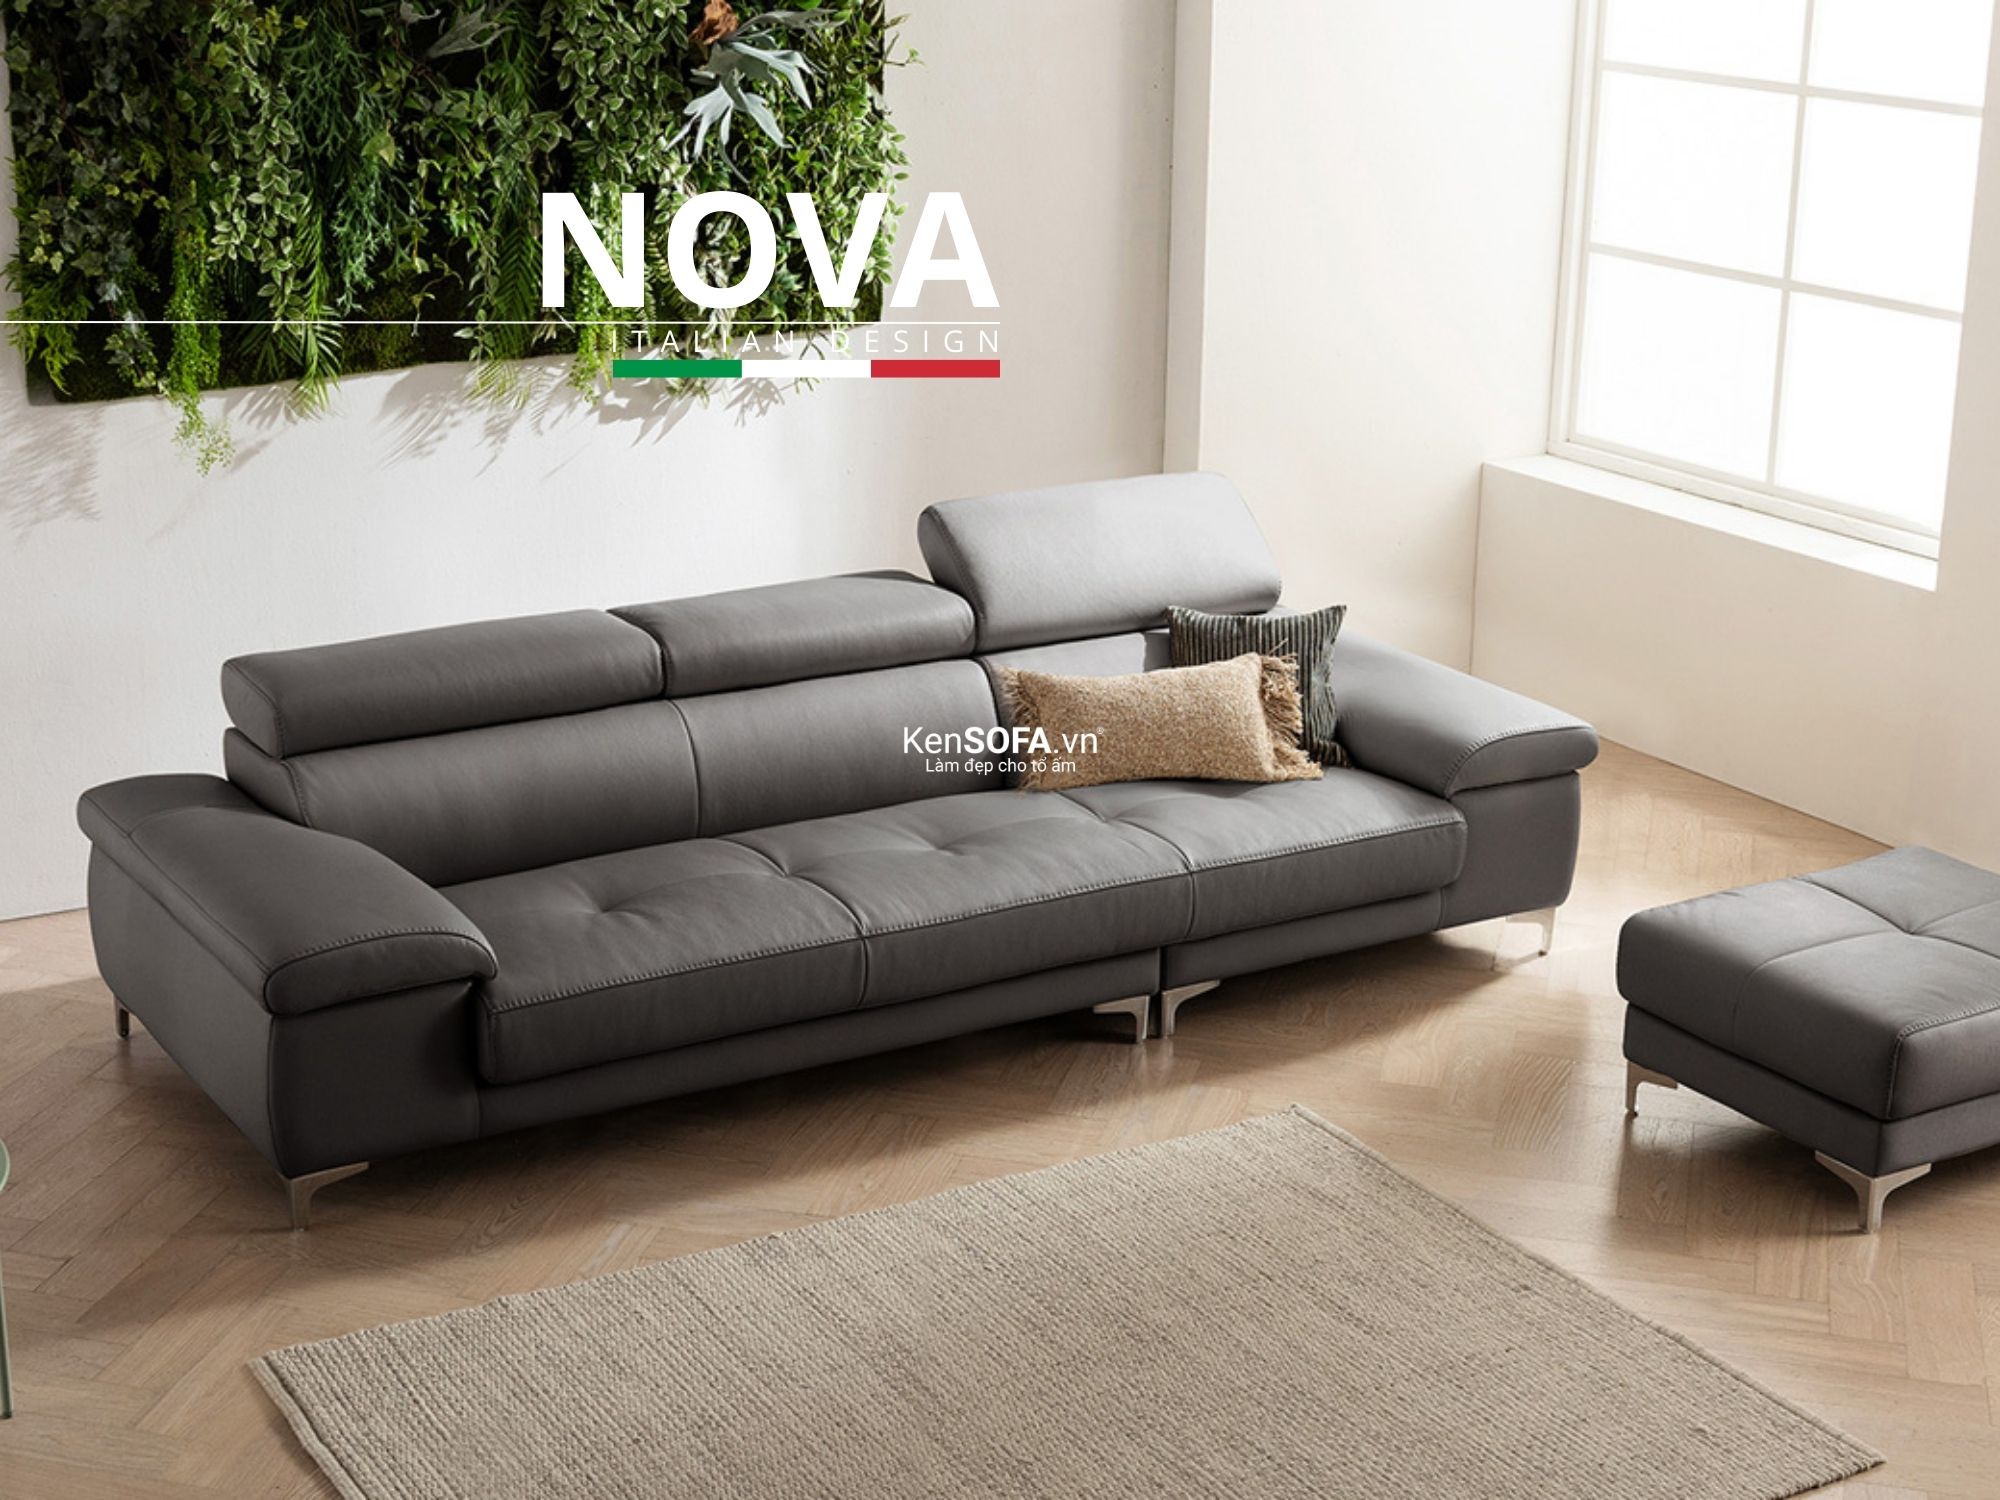 Sofa băng da cao cấp CC70 Nova da Hàn Quốc nhập khẩu